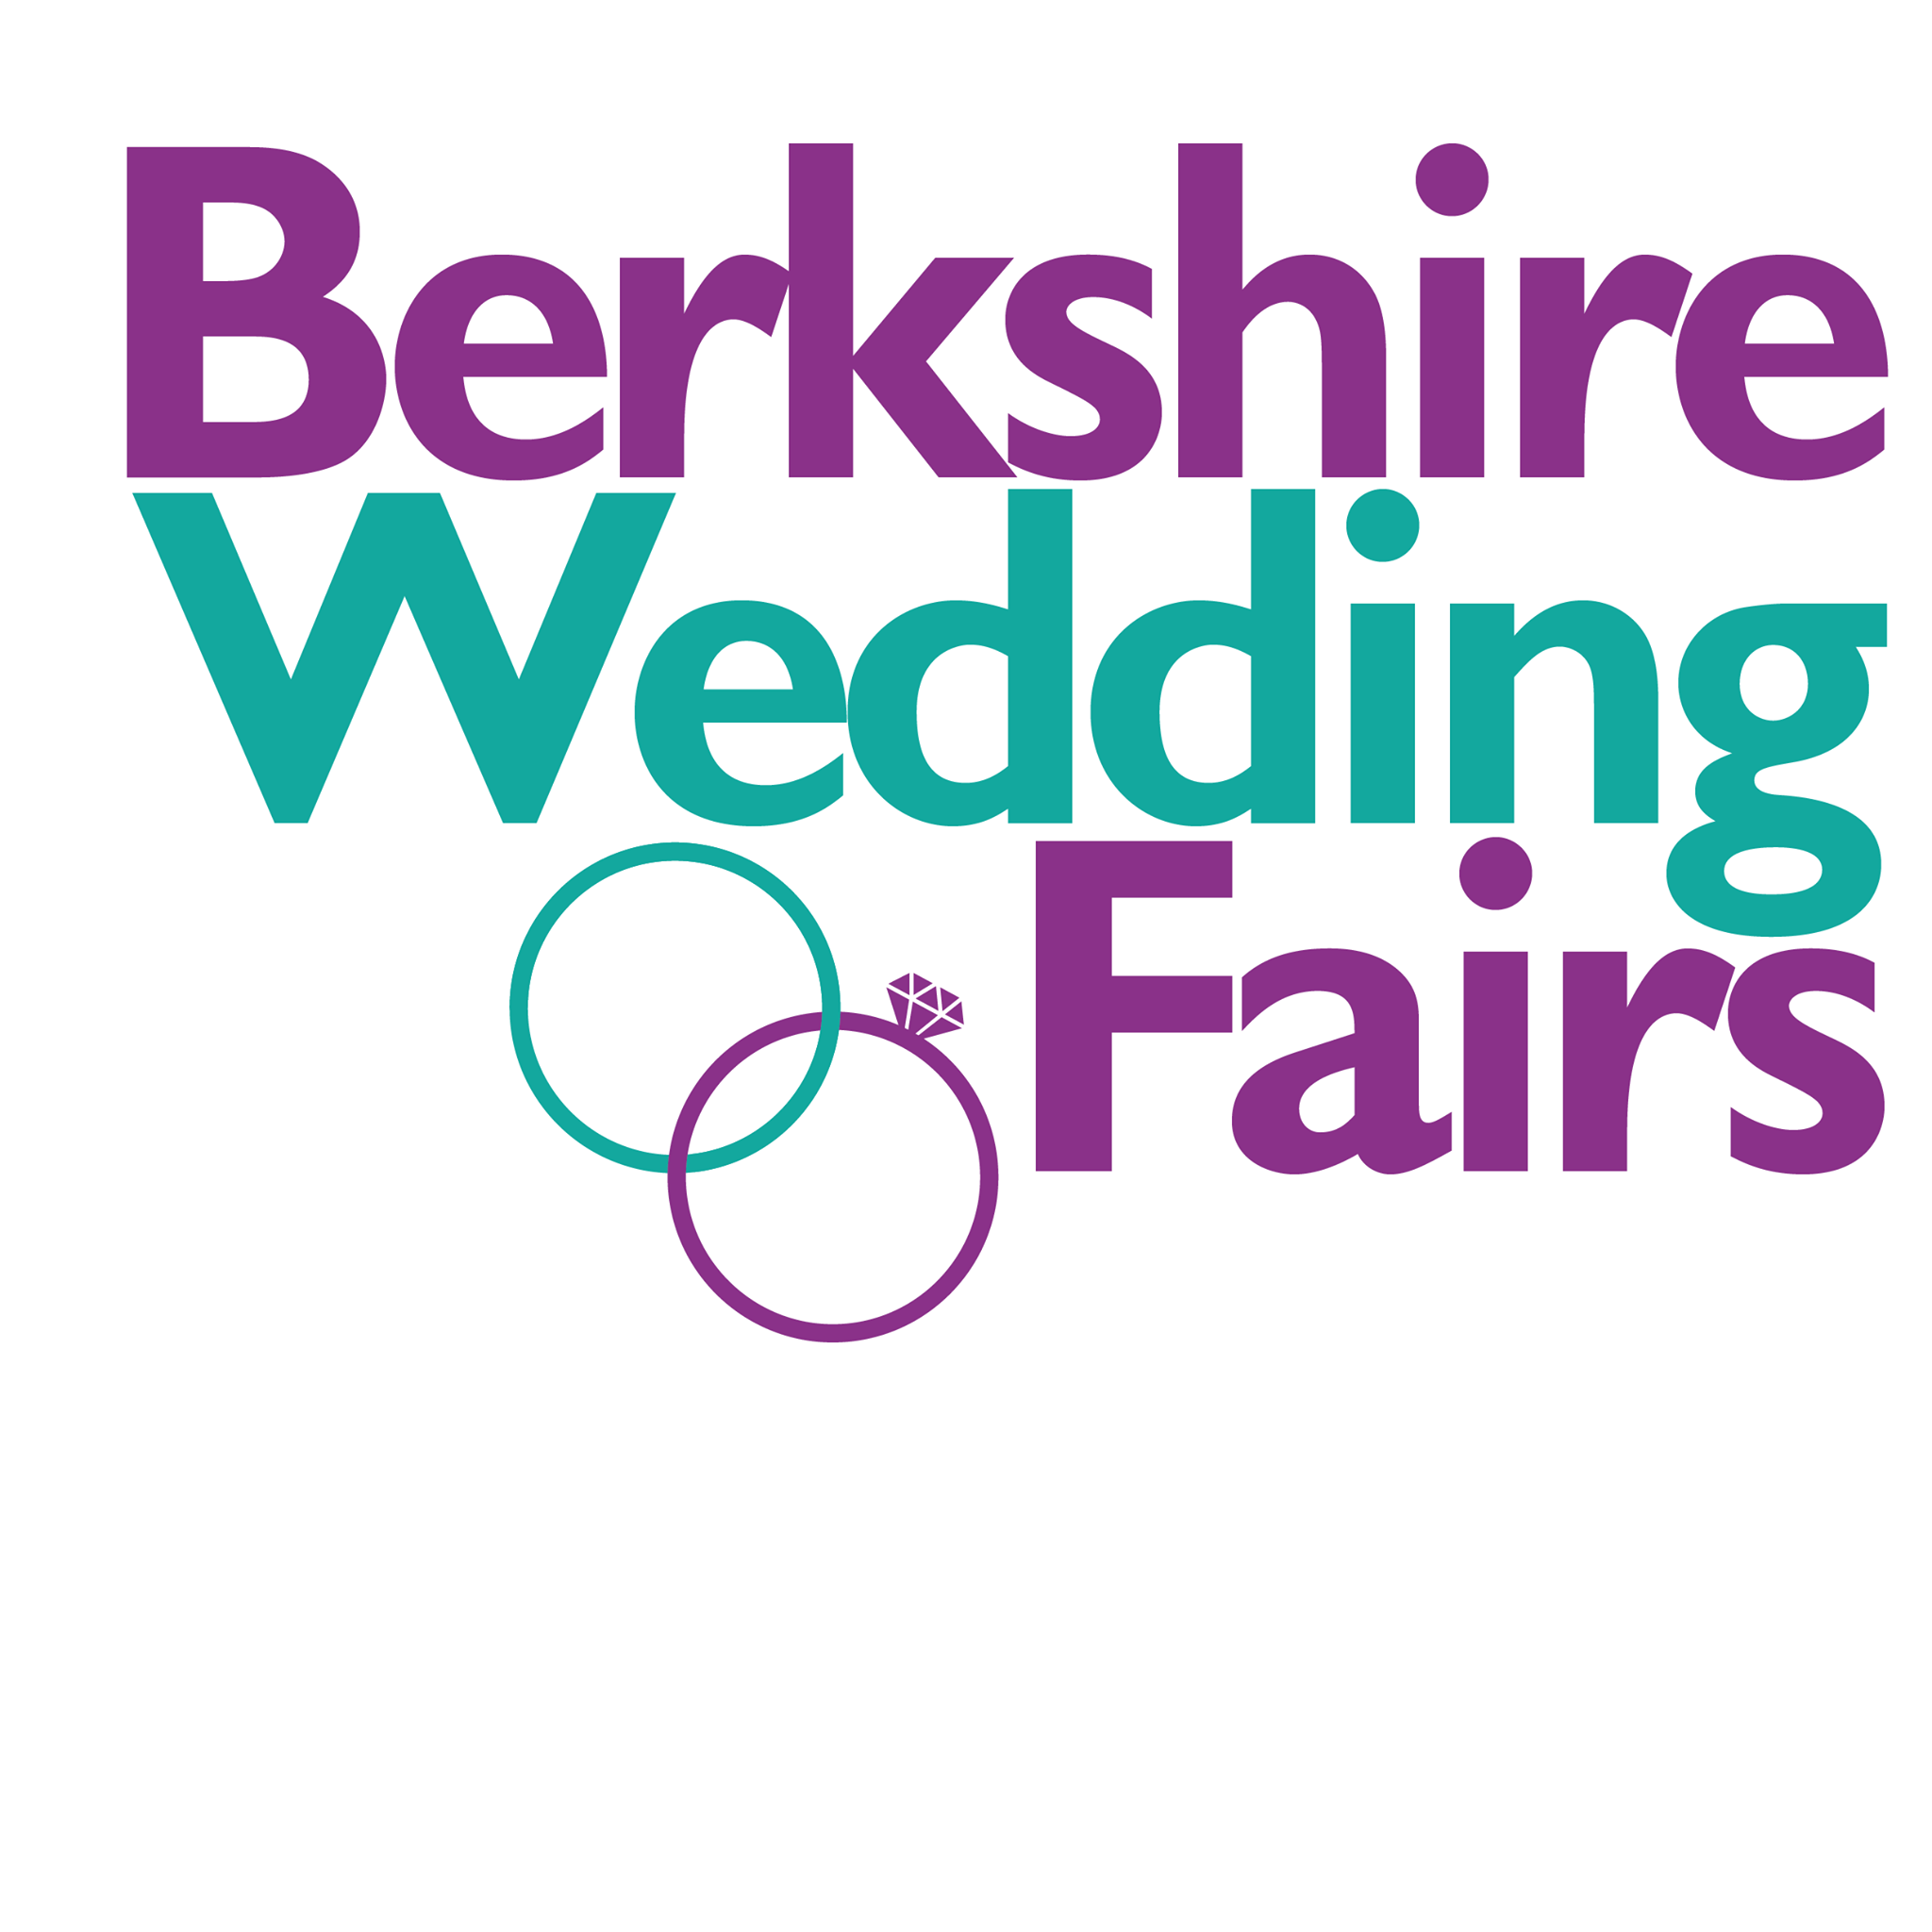 Berkshire Wedding Fairs